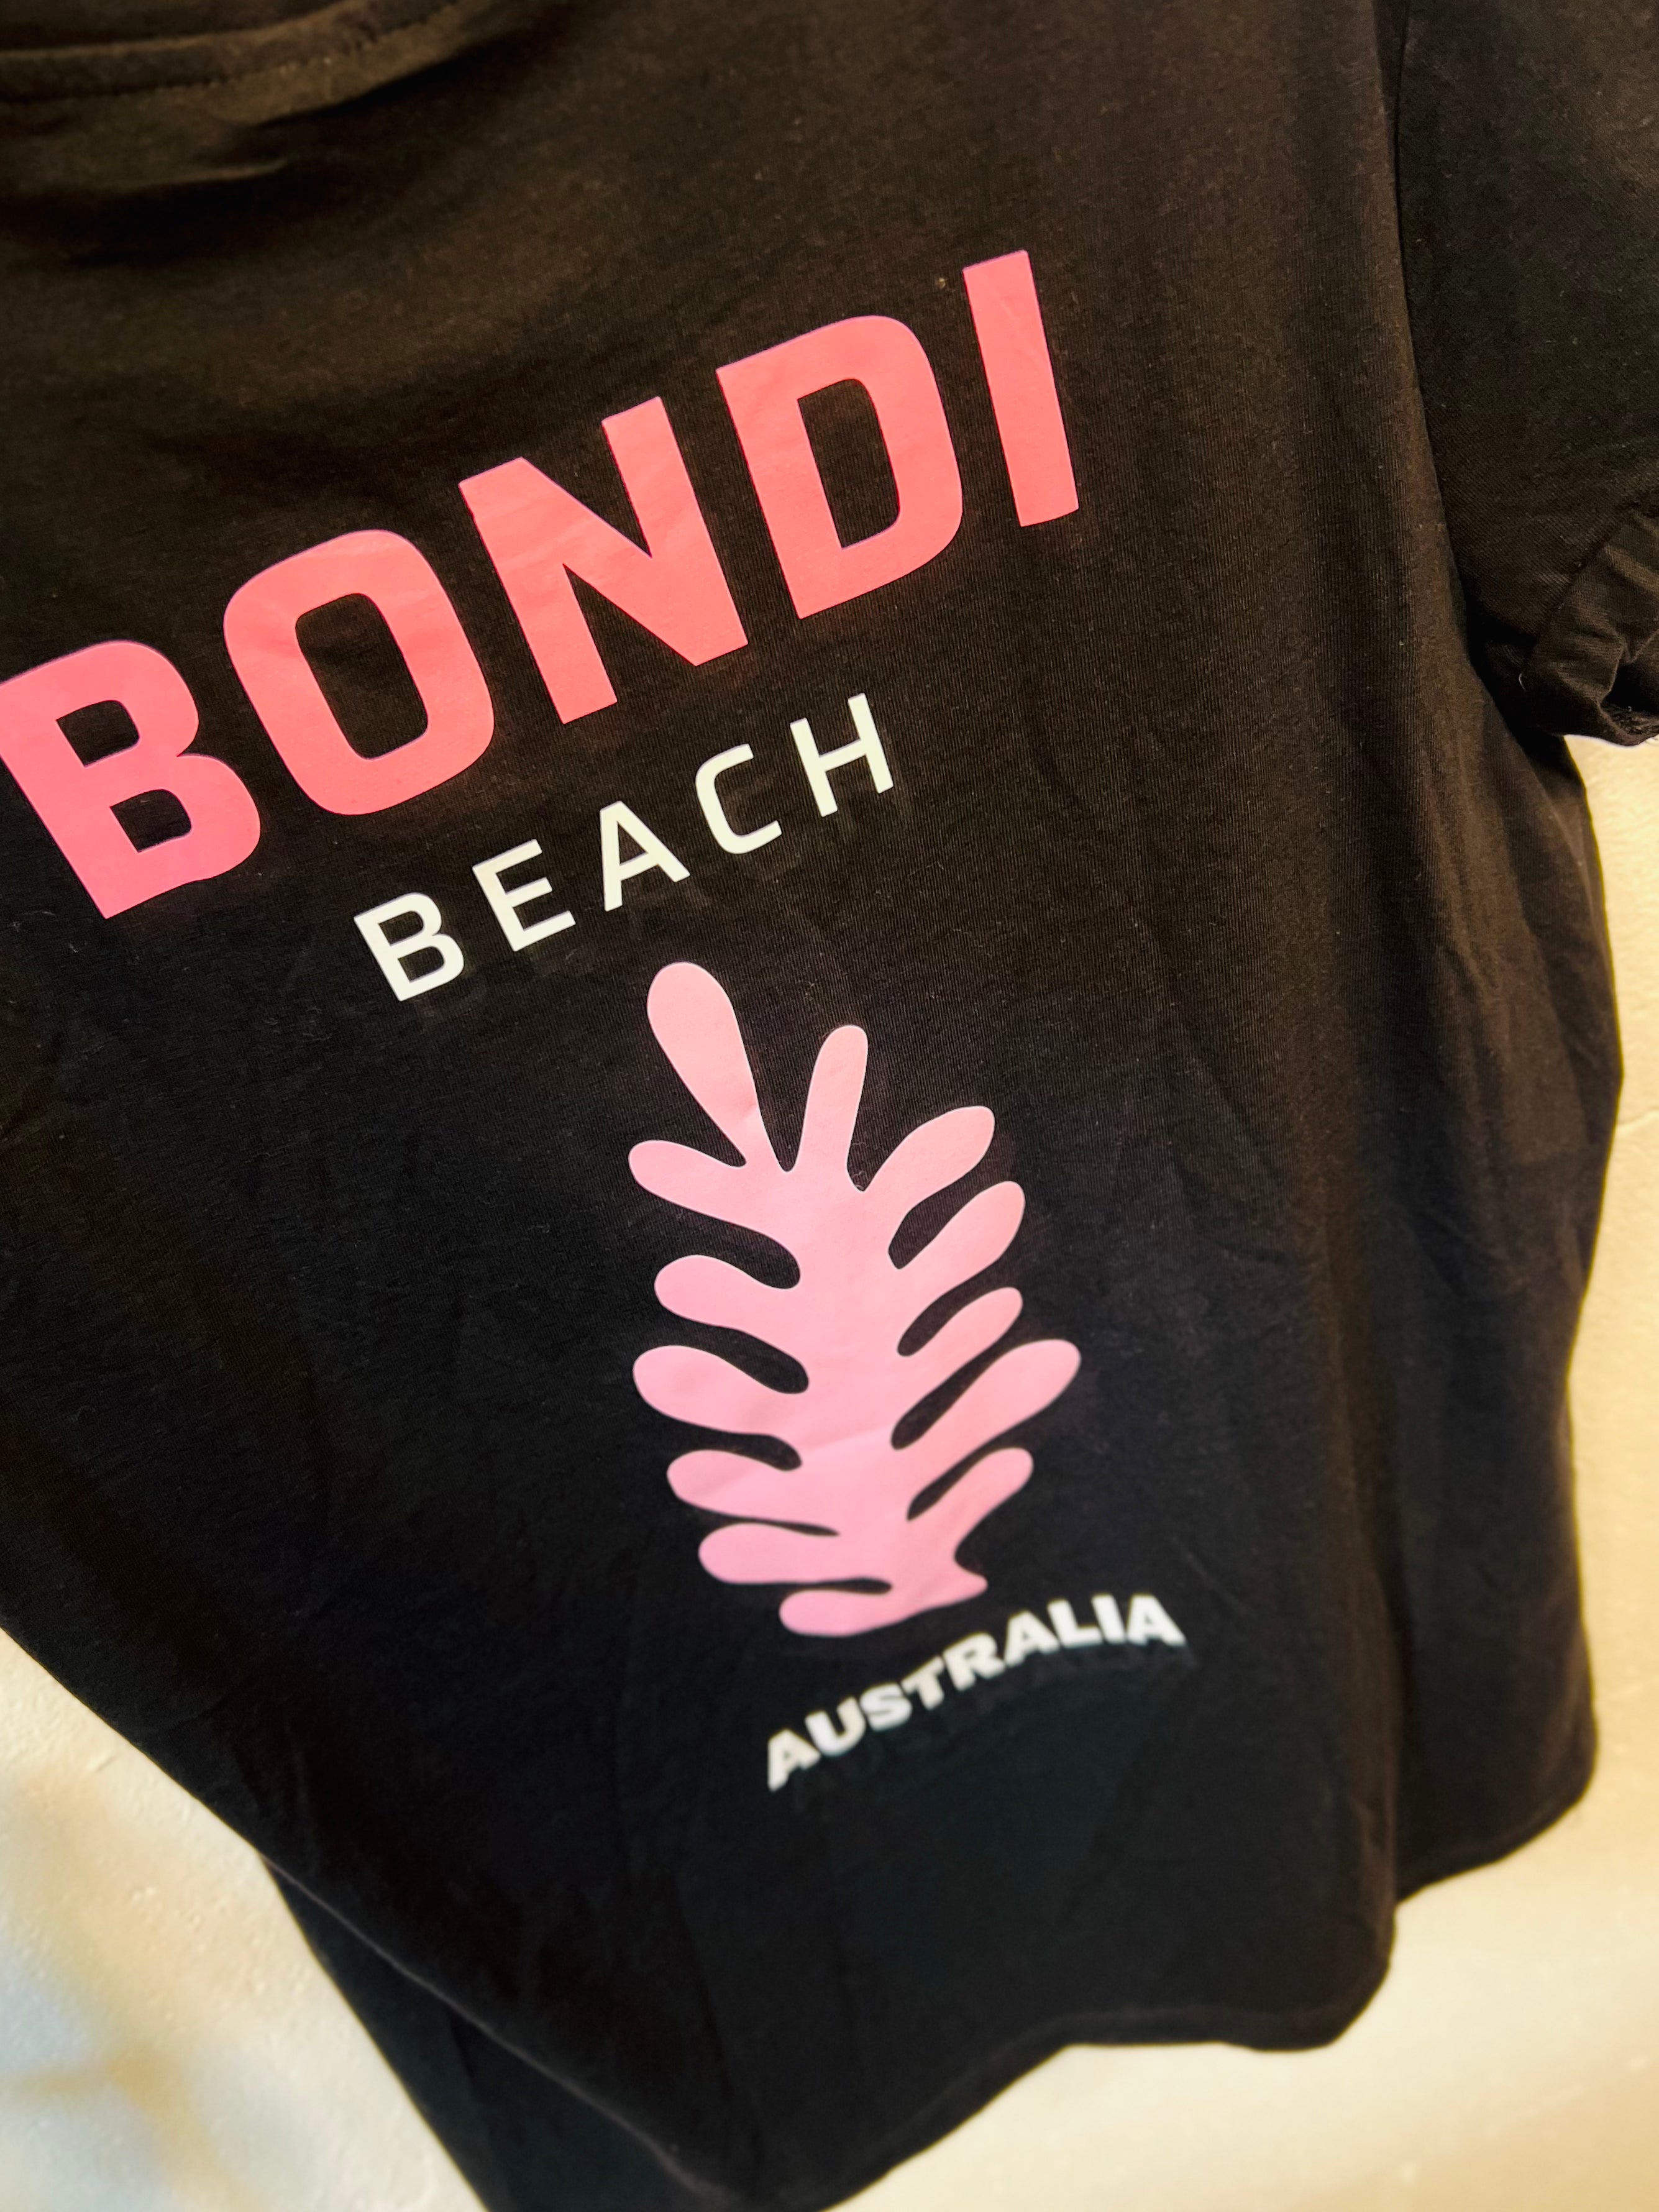 Tee-shirt BONDI BEACH AUSTRALIA